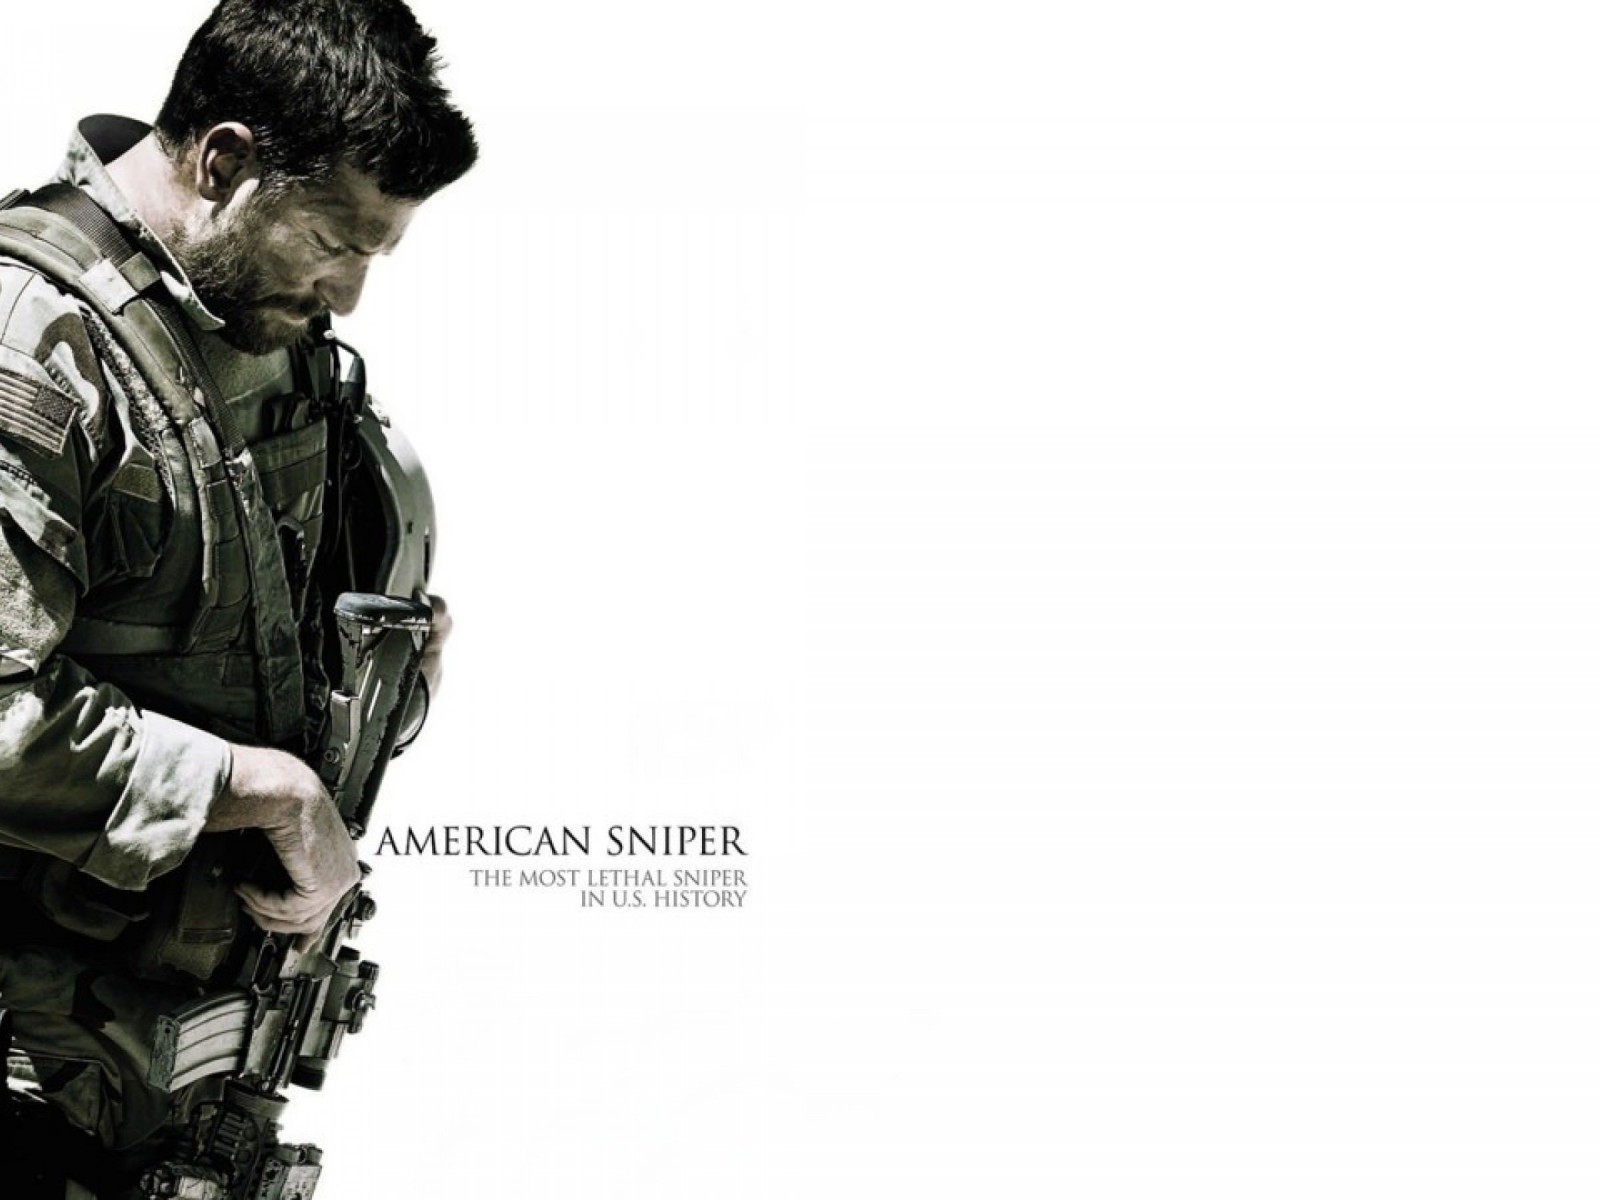 Bradley Cooper As Chris Kyle in American sniper Wallpaper for Desktop 1600x1200